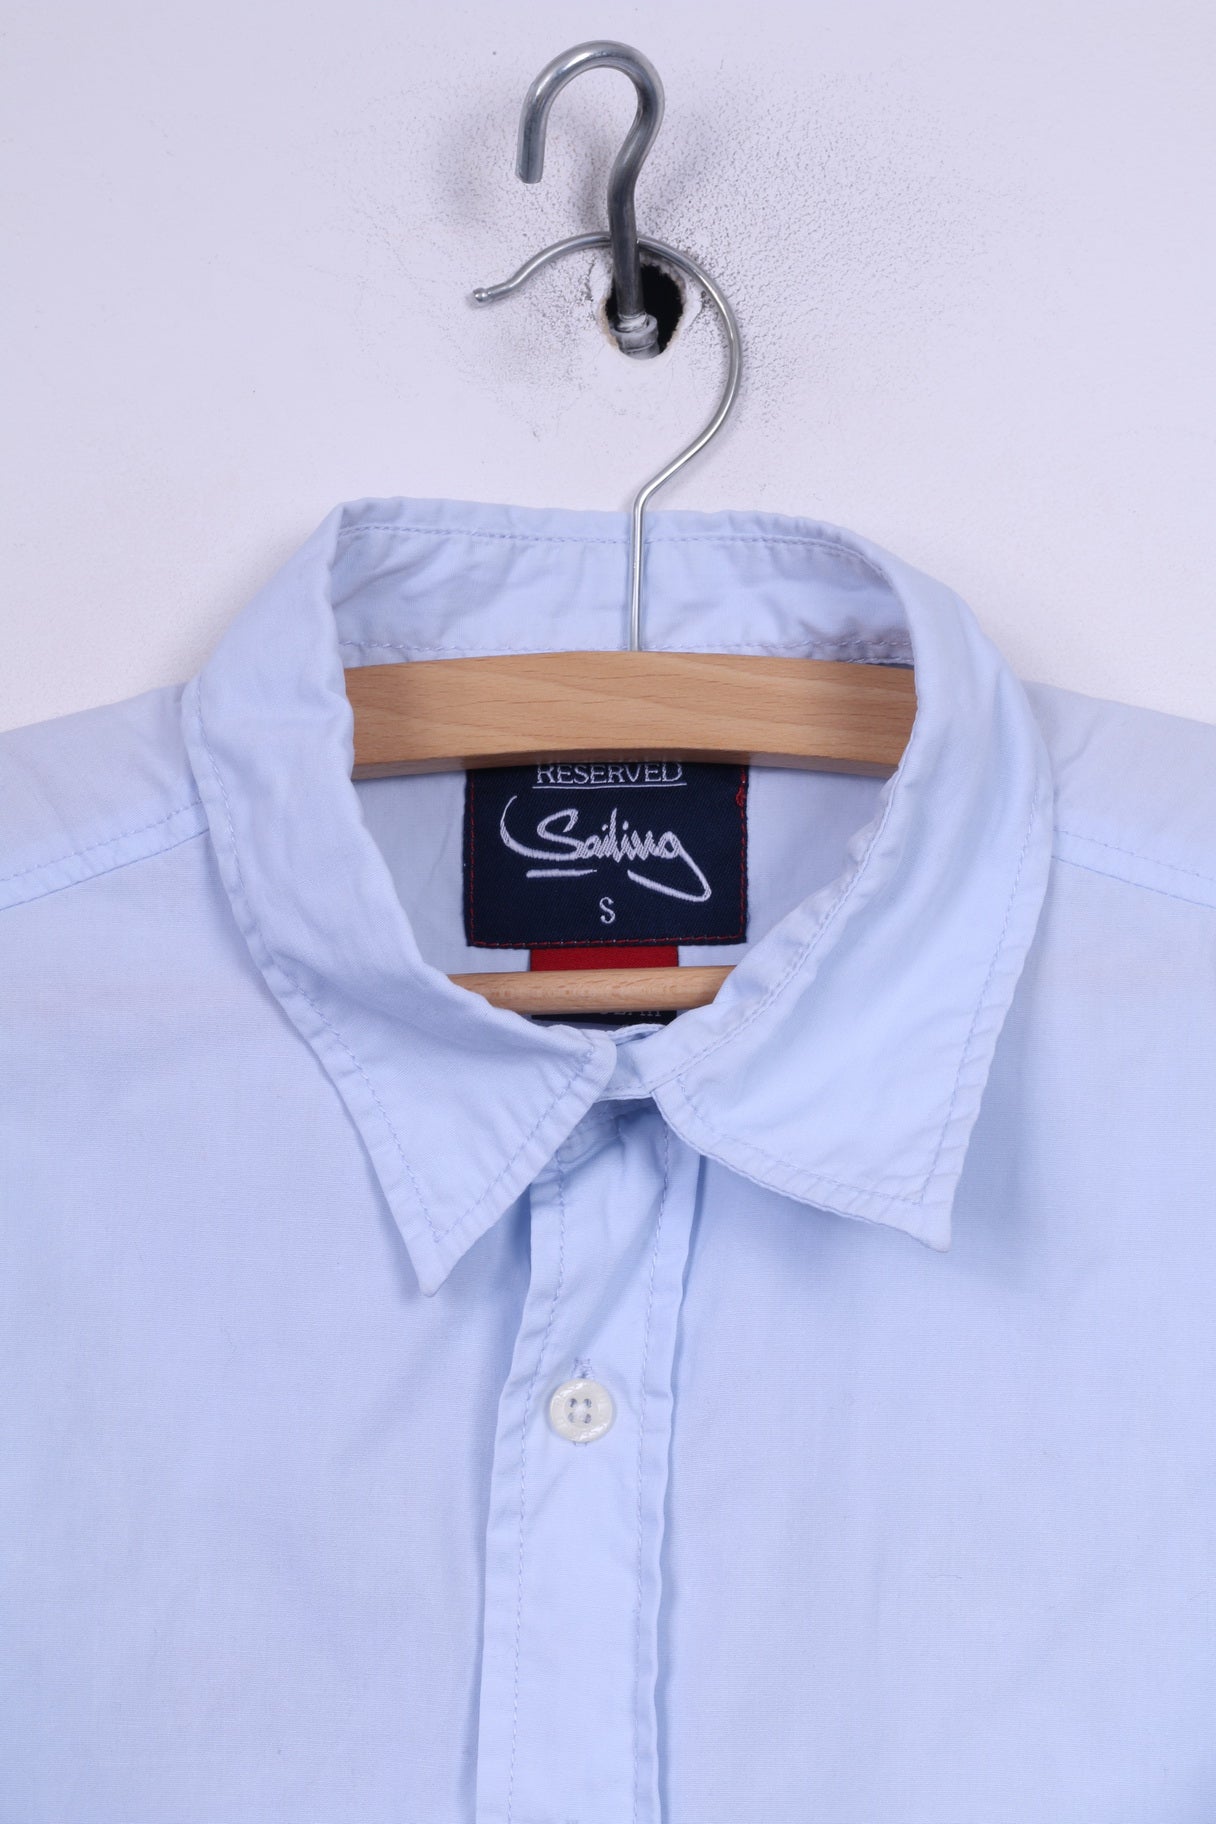 Reserved Sailing Mens S Casual Shirt Light Blue Short Sleeve Cotton Regular Top